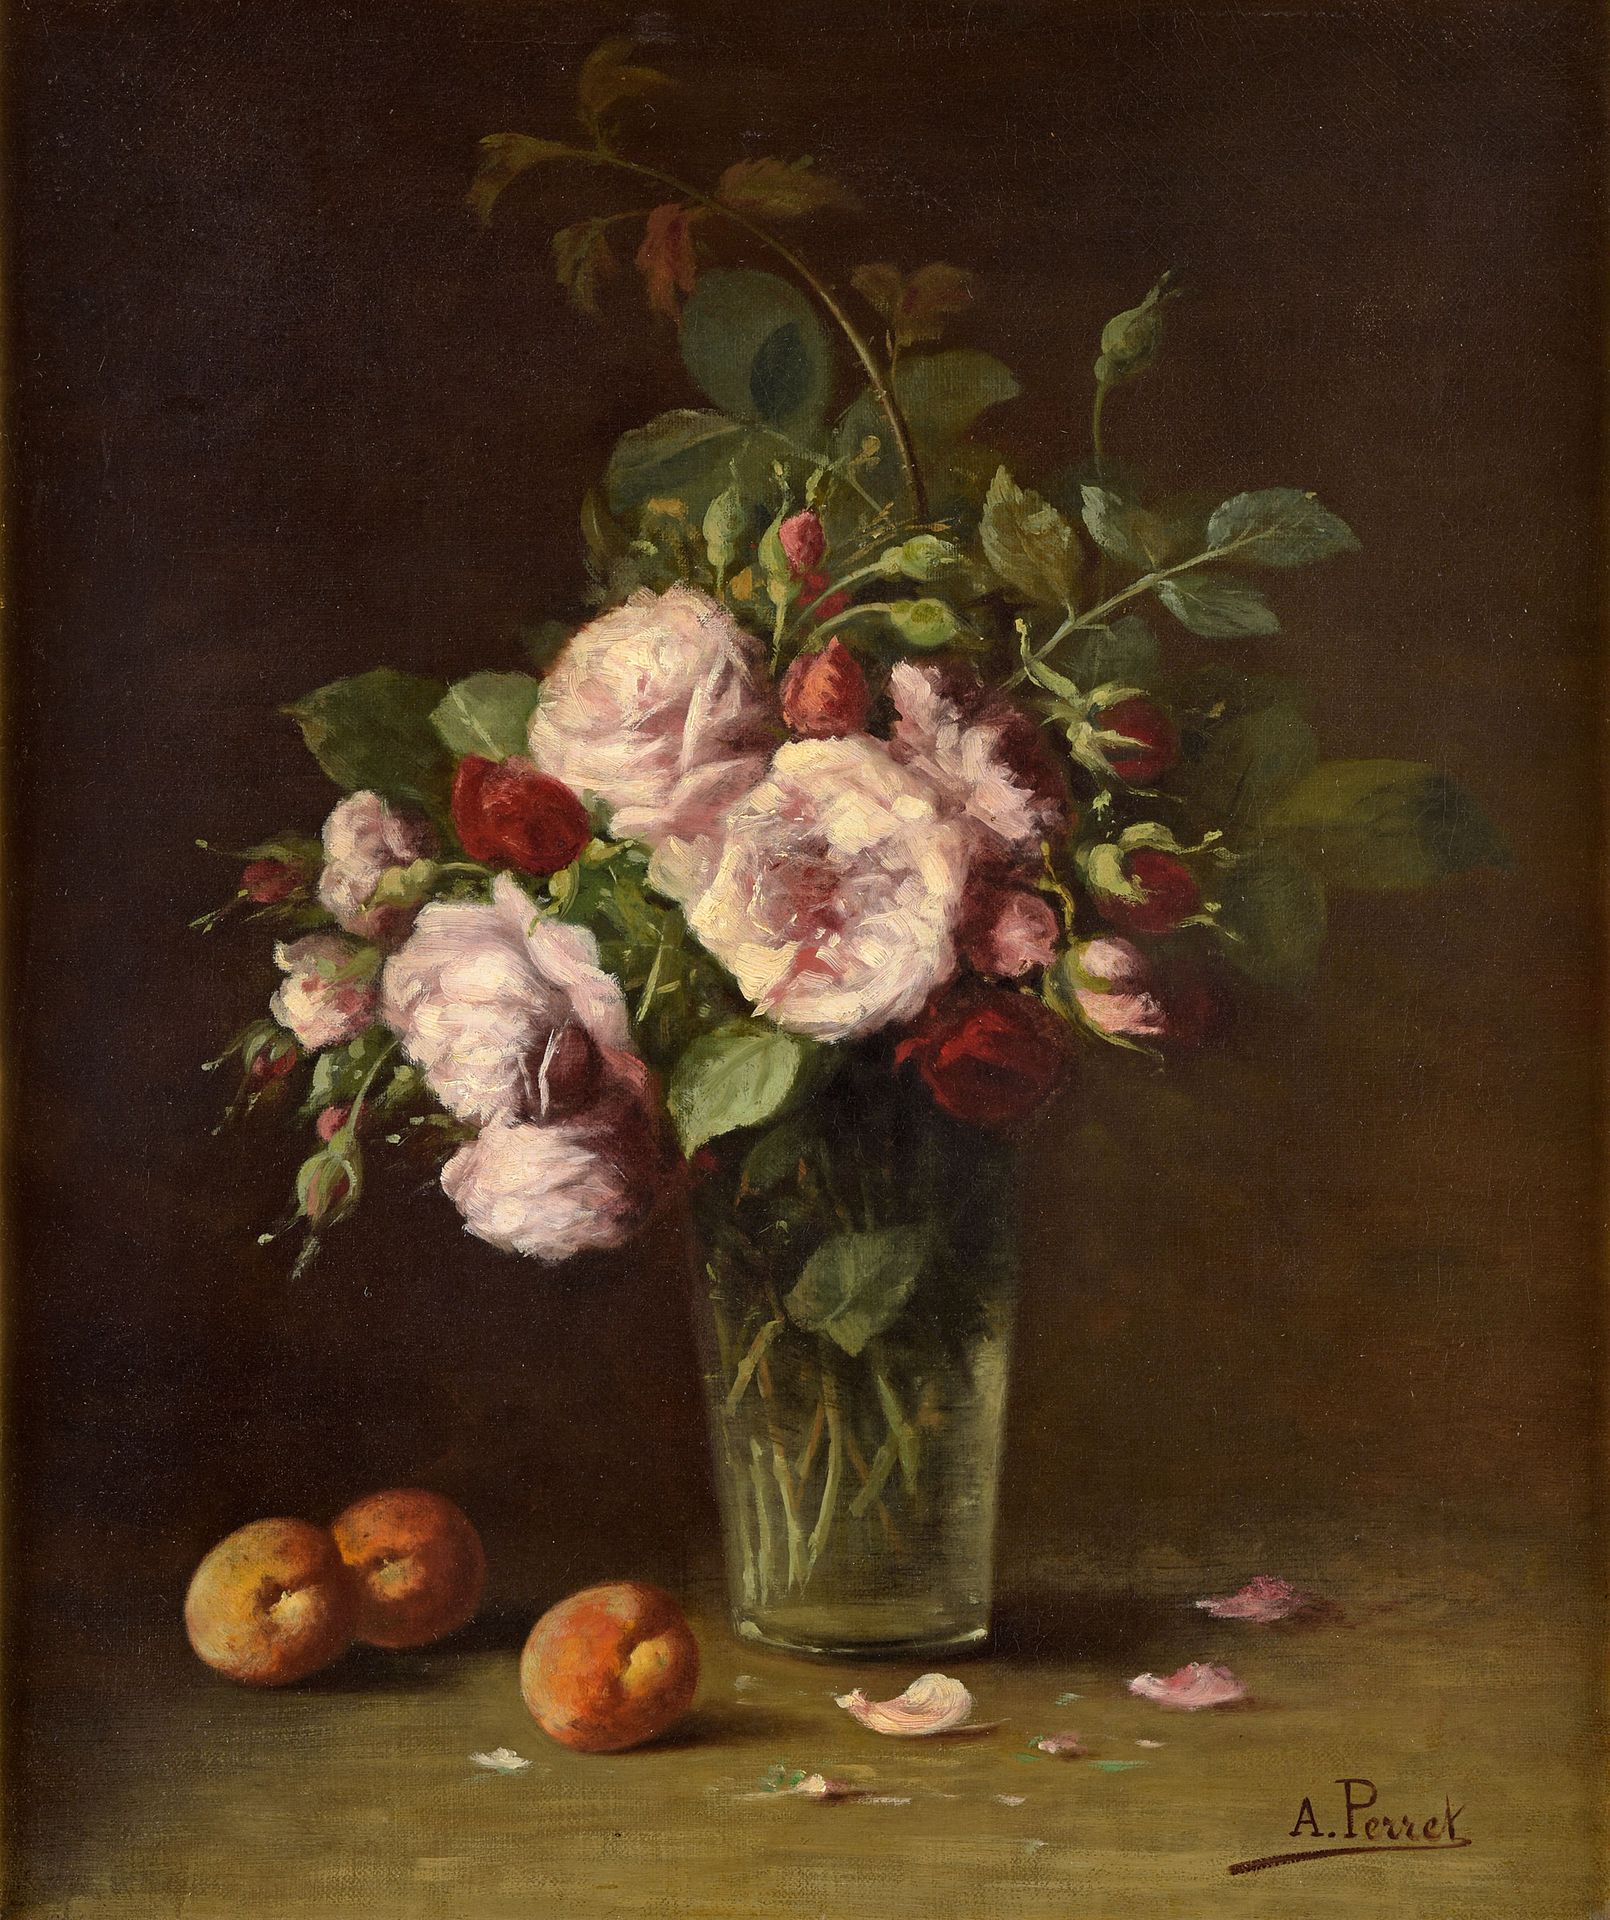 Perret, Aimé Perret, Aimé 1847 Lyon - 1927 Paris
Still life of roses with aprico&hellip;